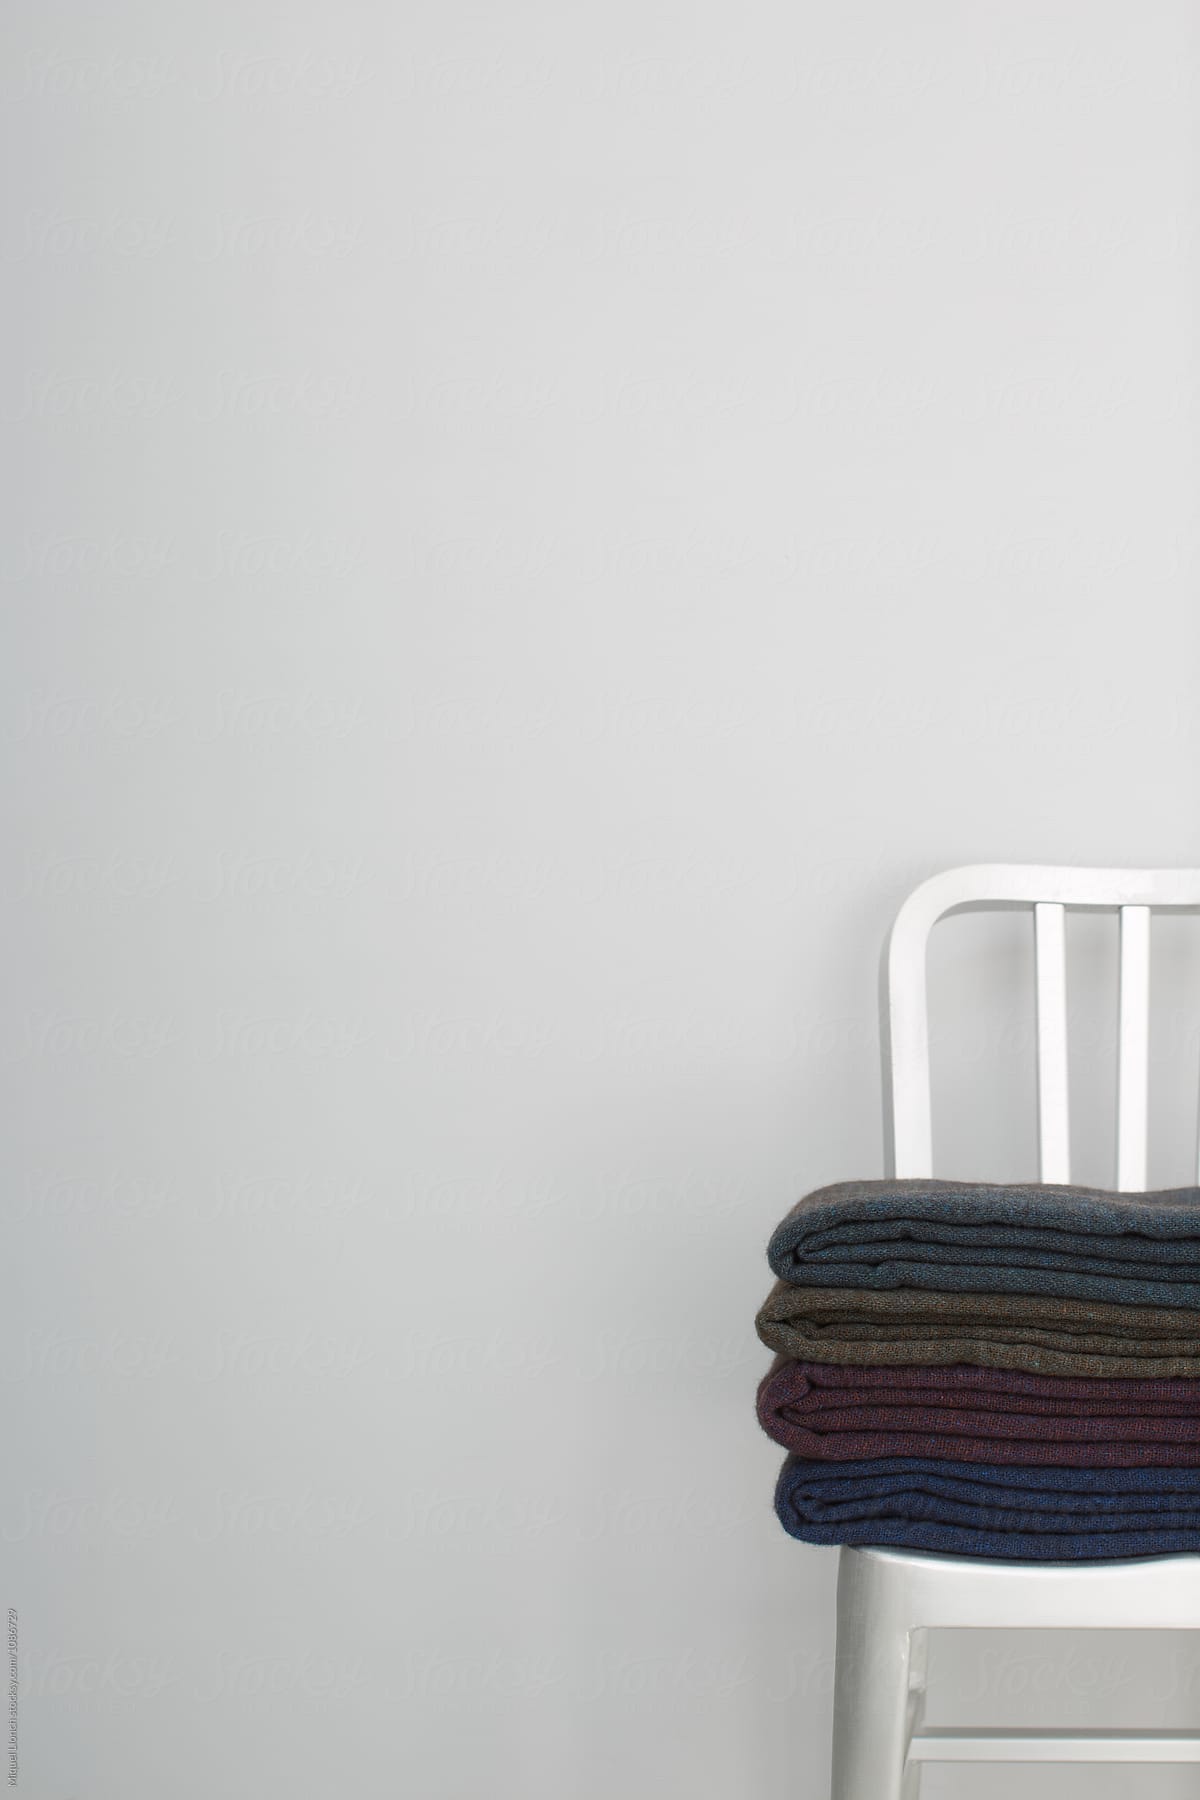 Metallic chair with handmade wool blankets